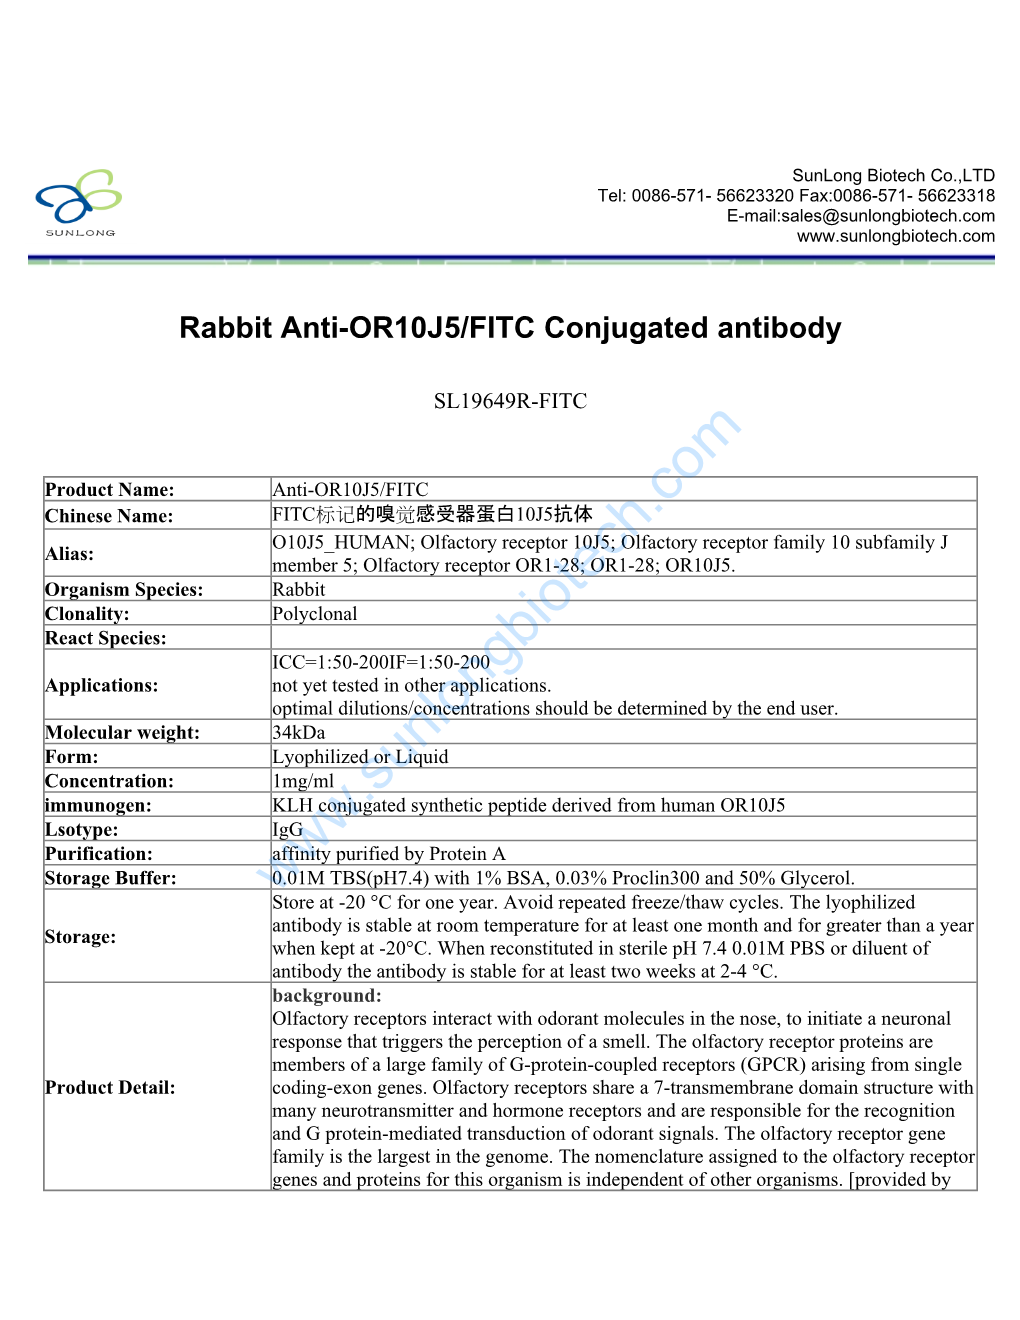 Rabbit Anti-OR10J5/FITC Conjugated Antibody